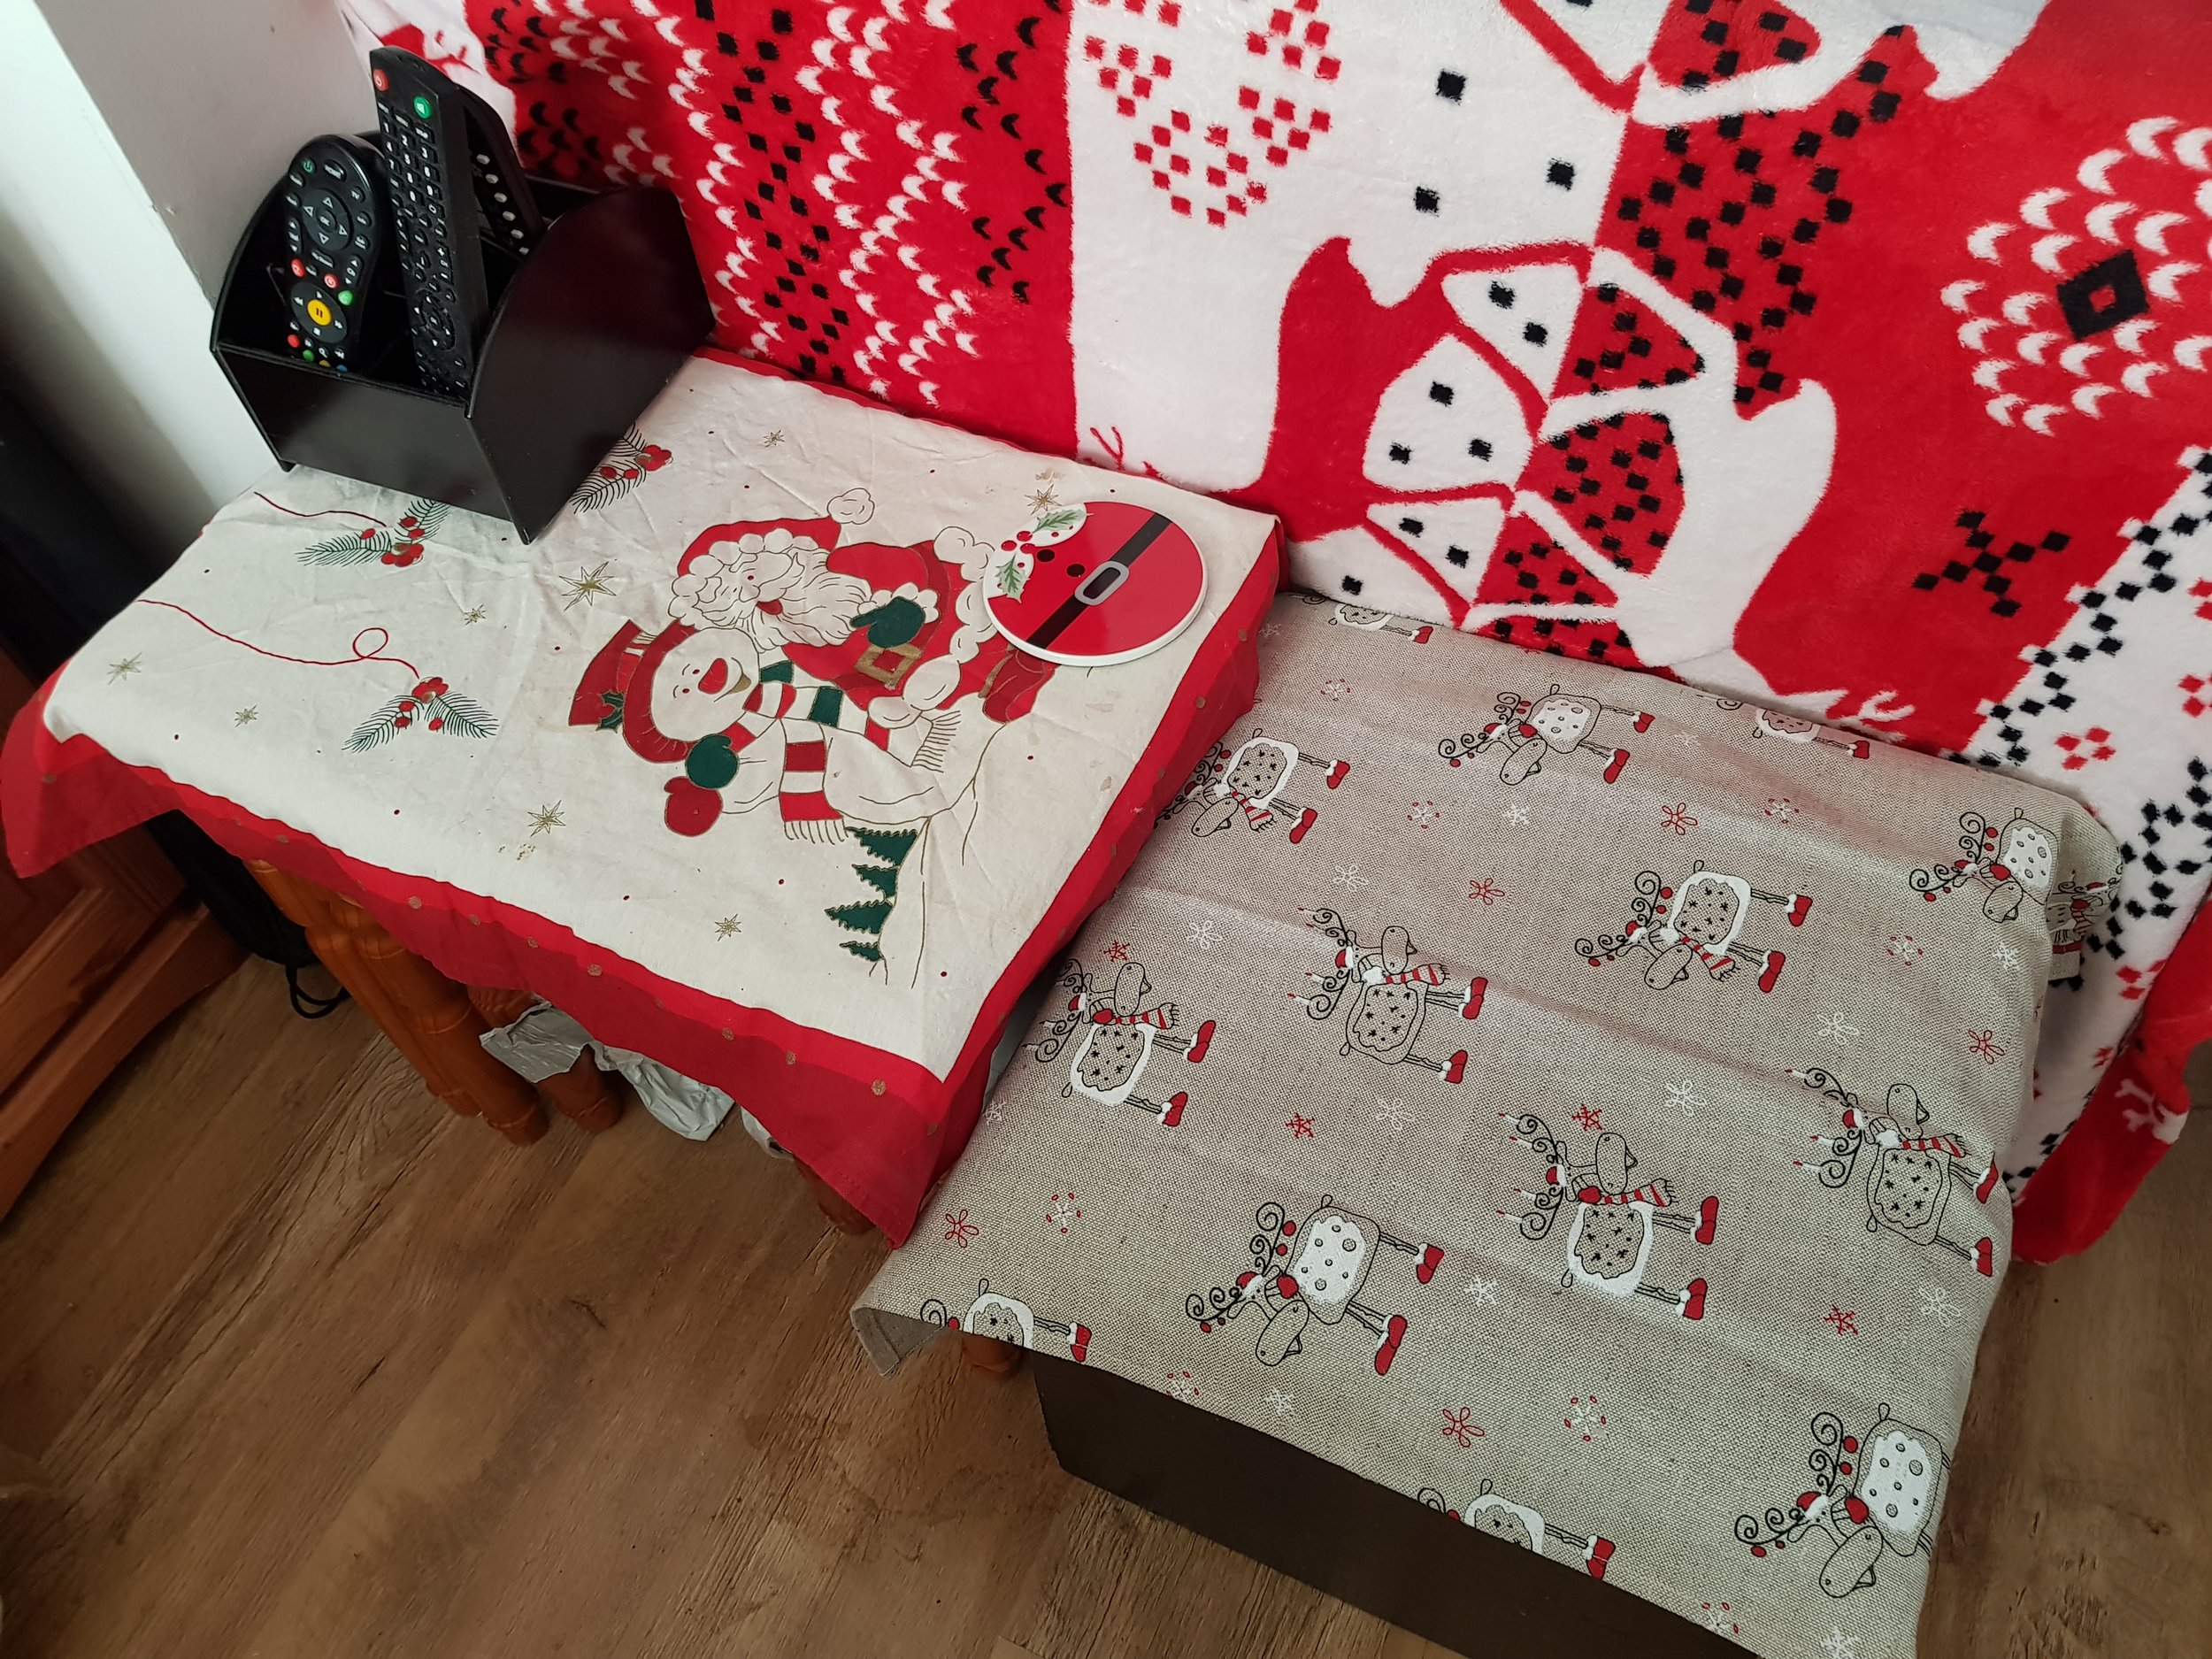 Christmas table cloths